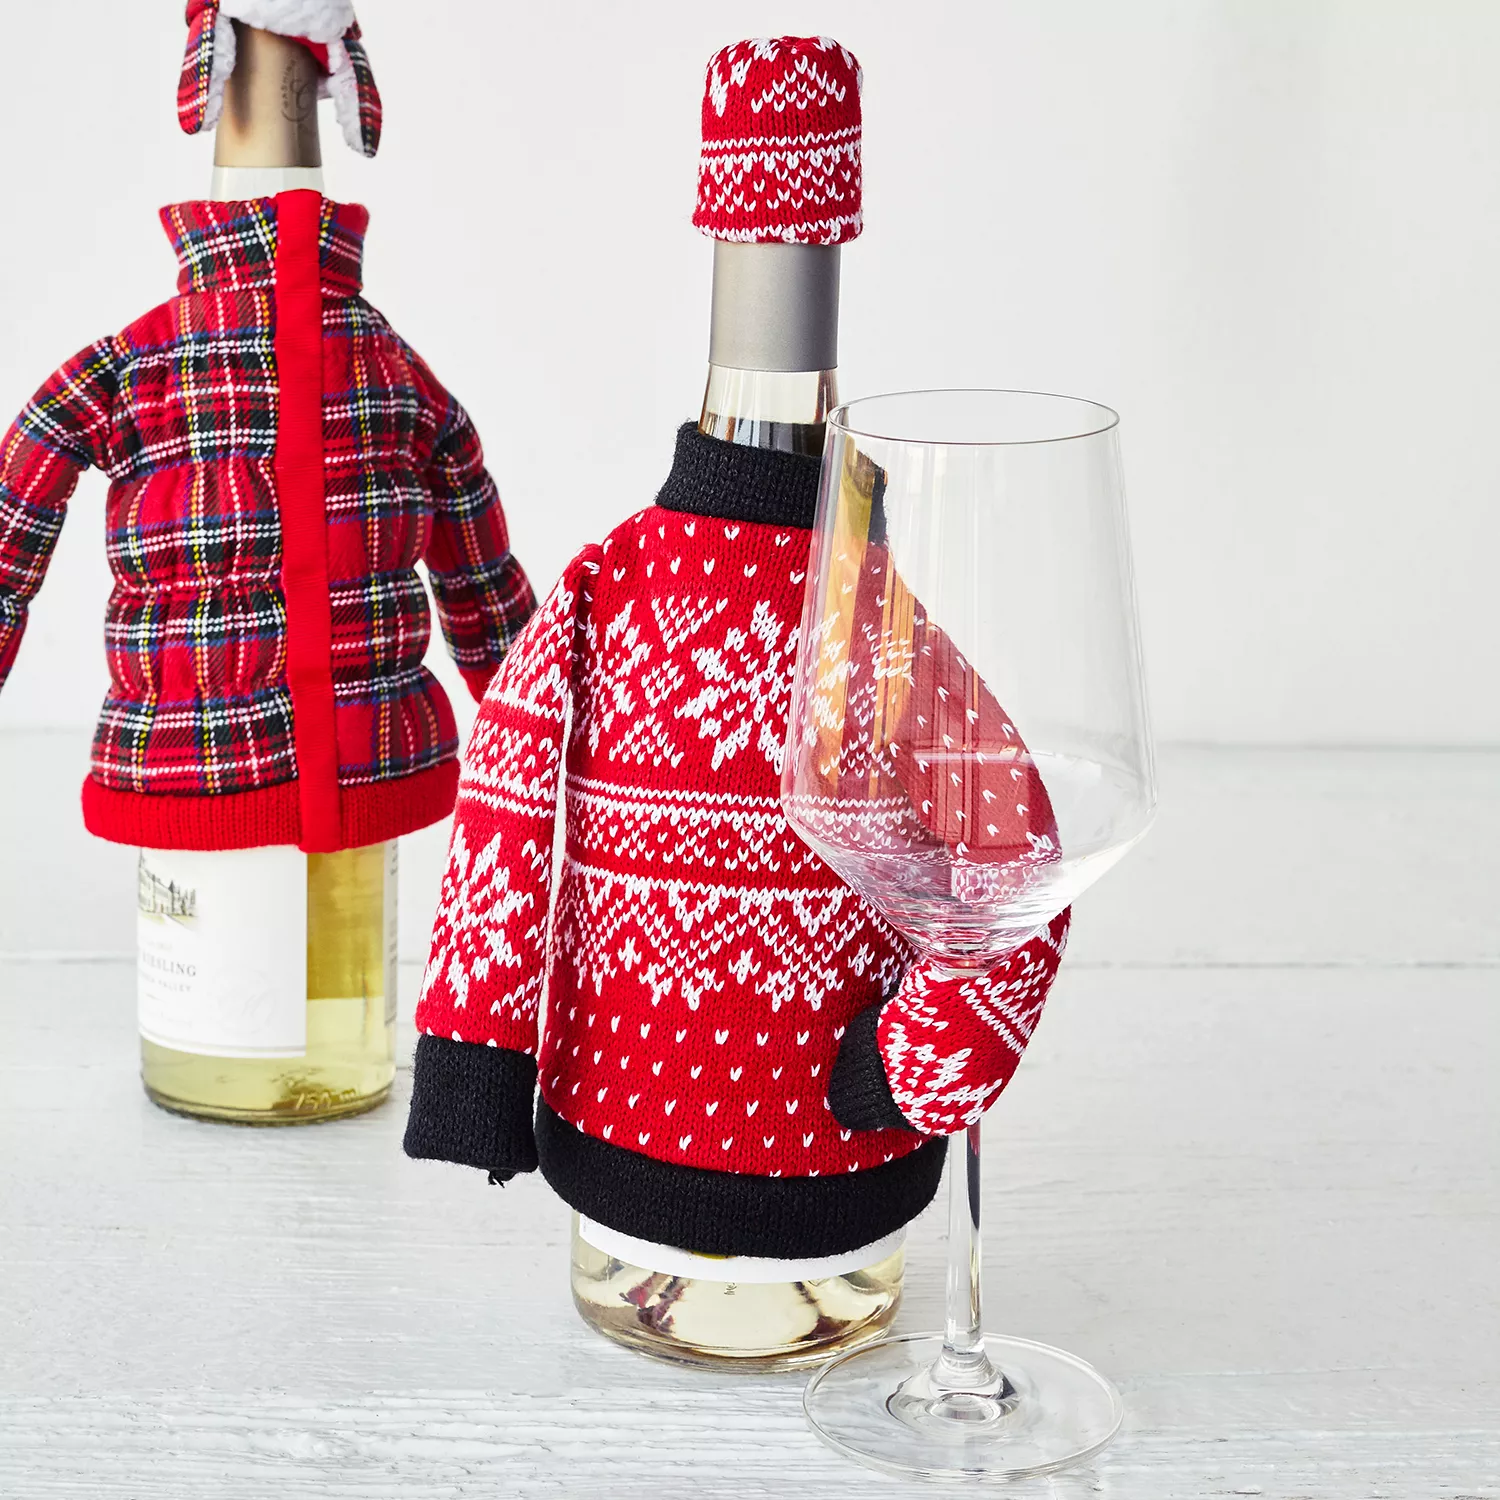 Sur La Table Apr&#232;s Ski Wine Bottle Sweater